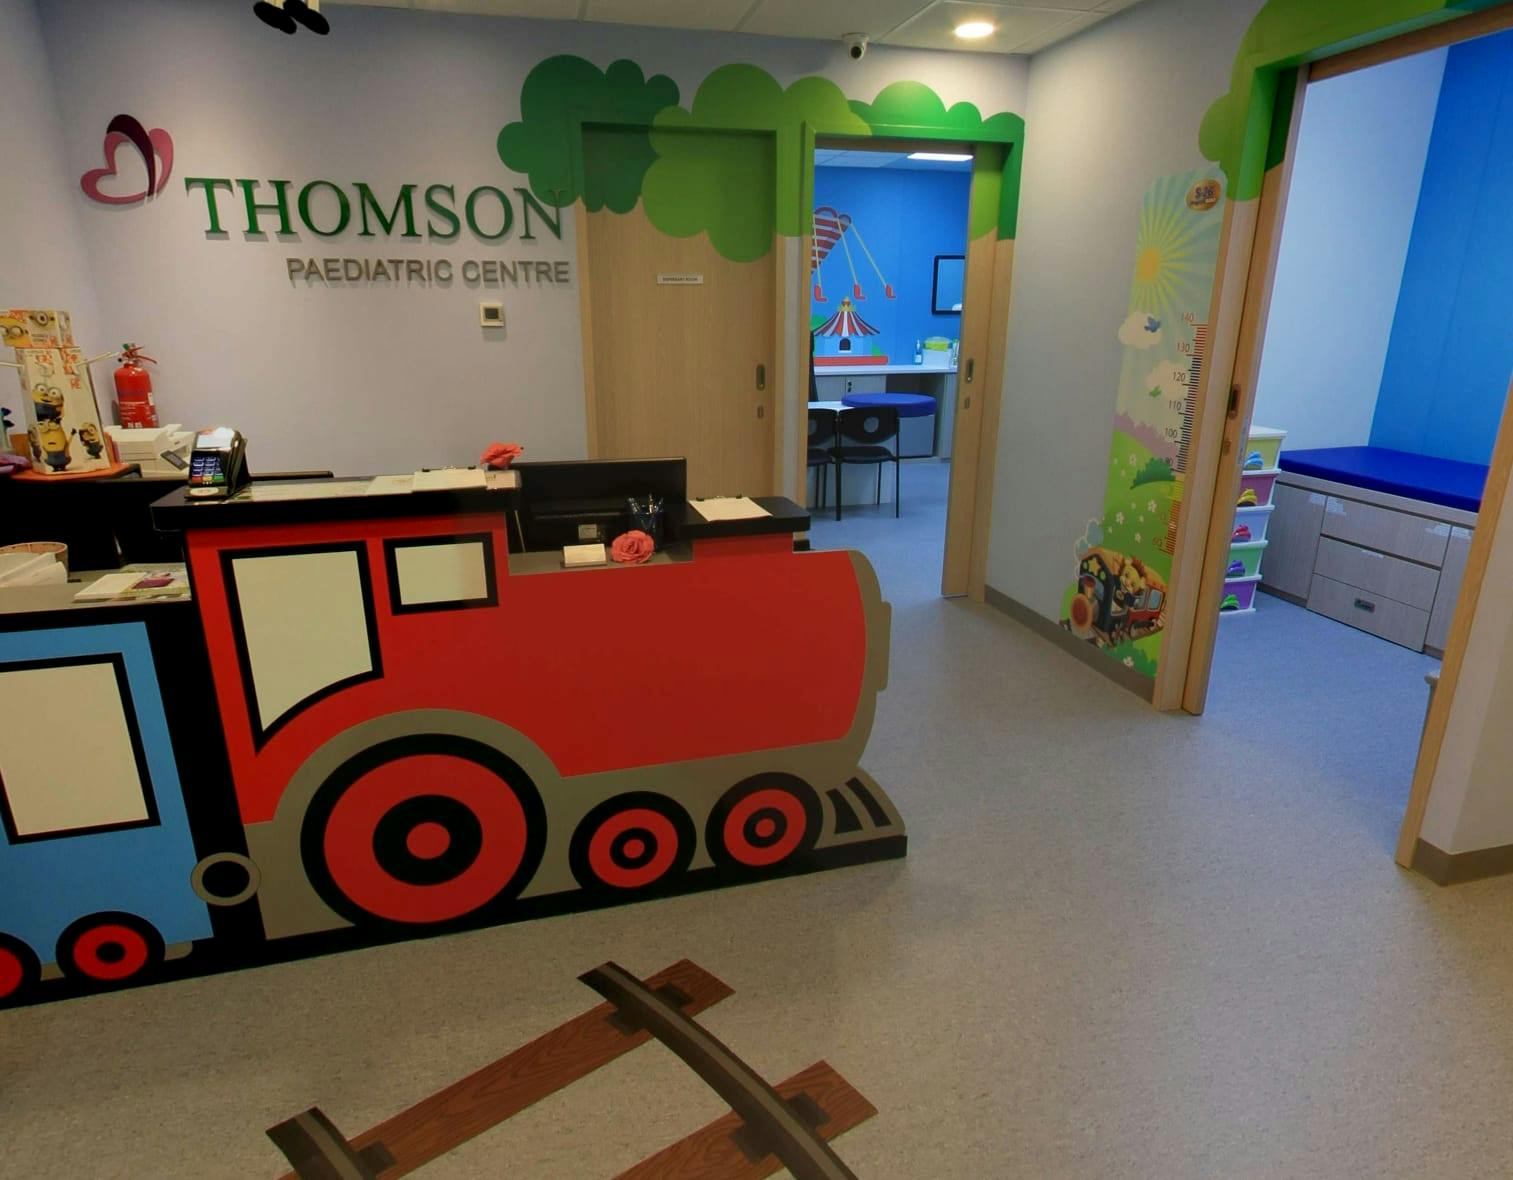 Thomson Paediatric Centre (Bukit Panjang)